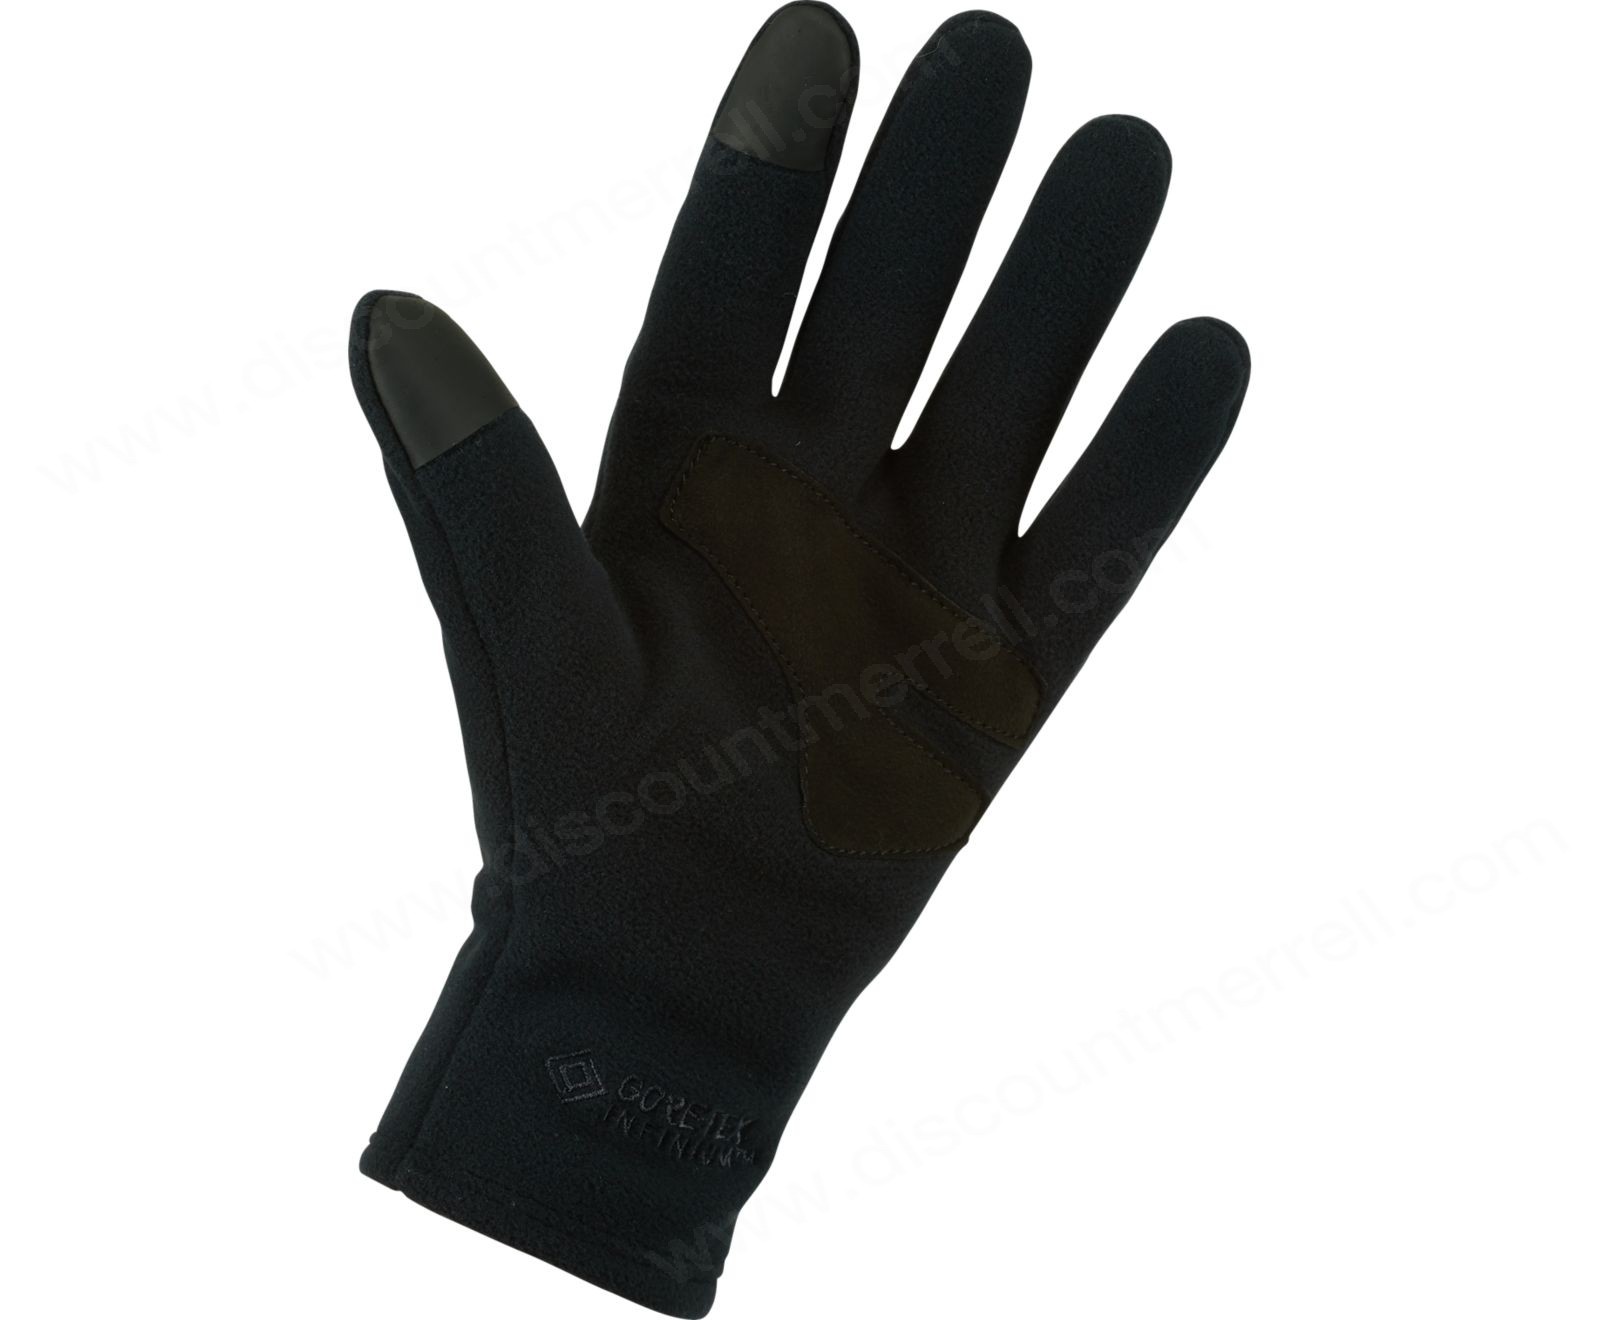 Merrell - GORE-TEX® Fleece Lined Glove - Merrell - GORE-TEX® Fleece Lined Glove